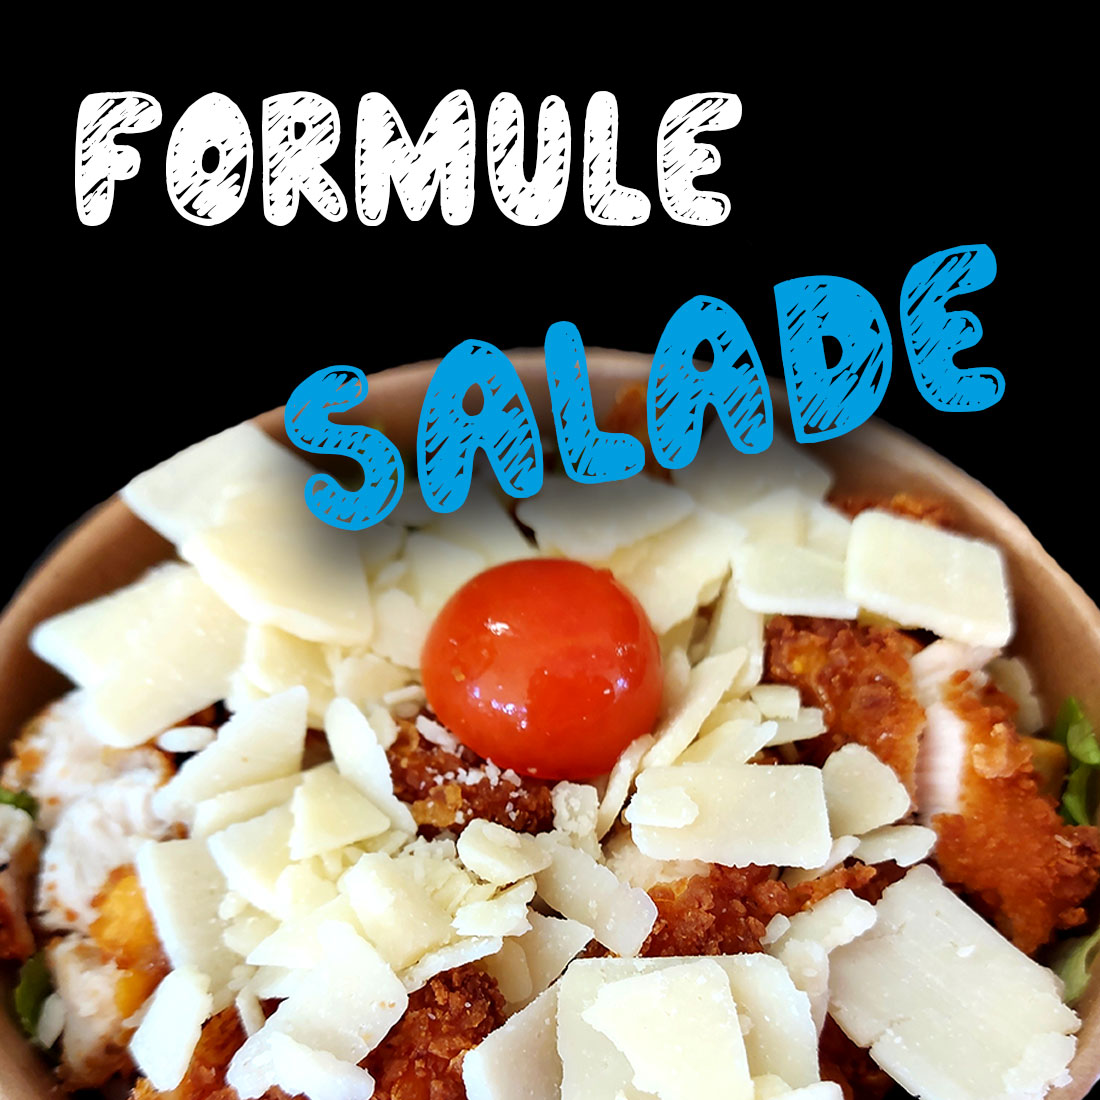 Formule Salade